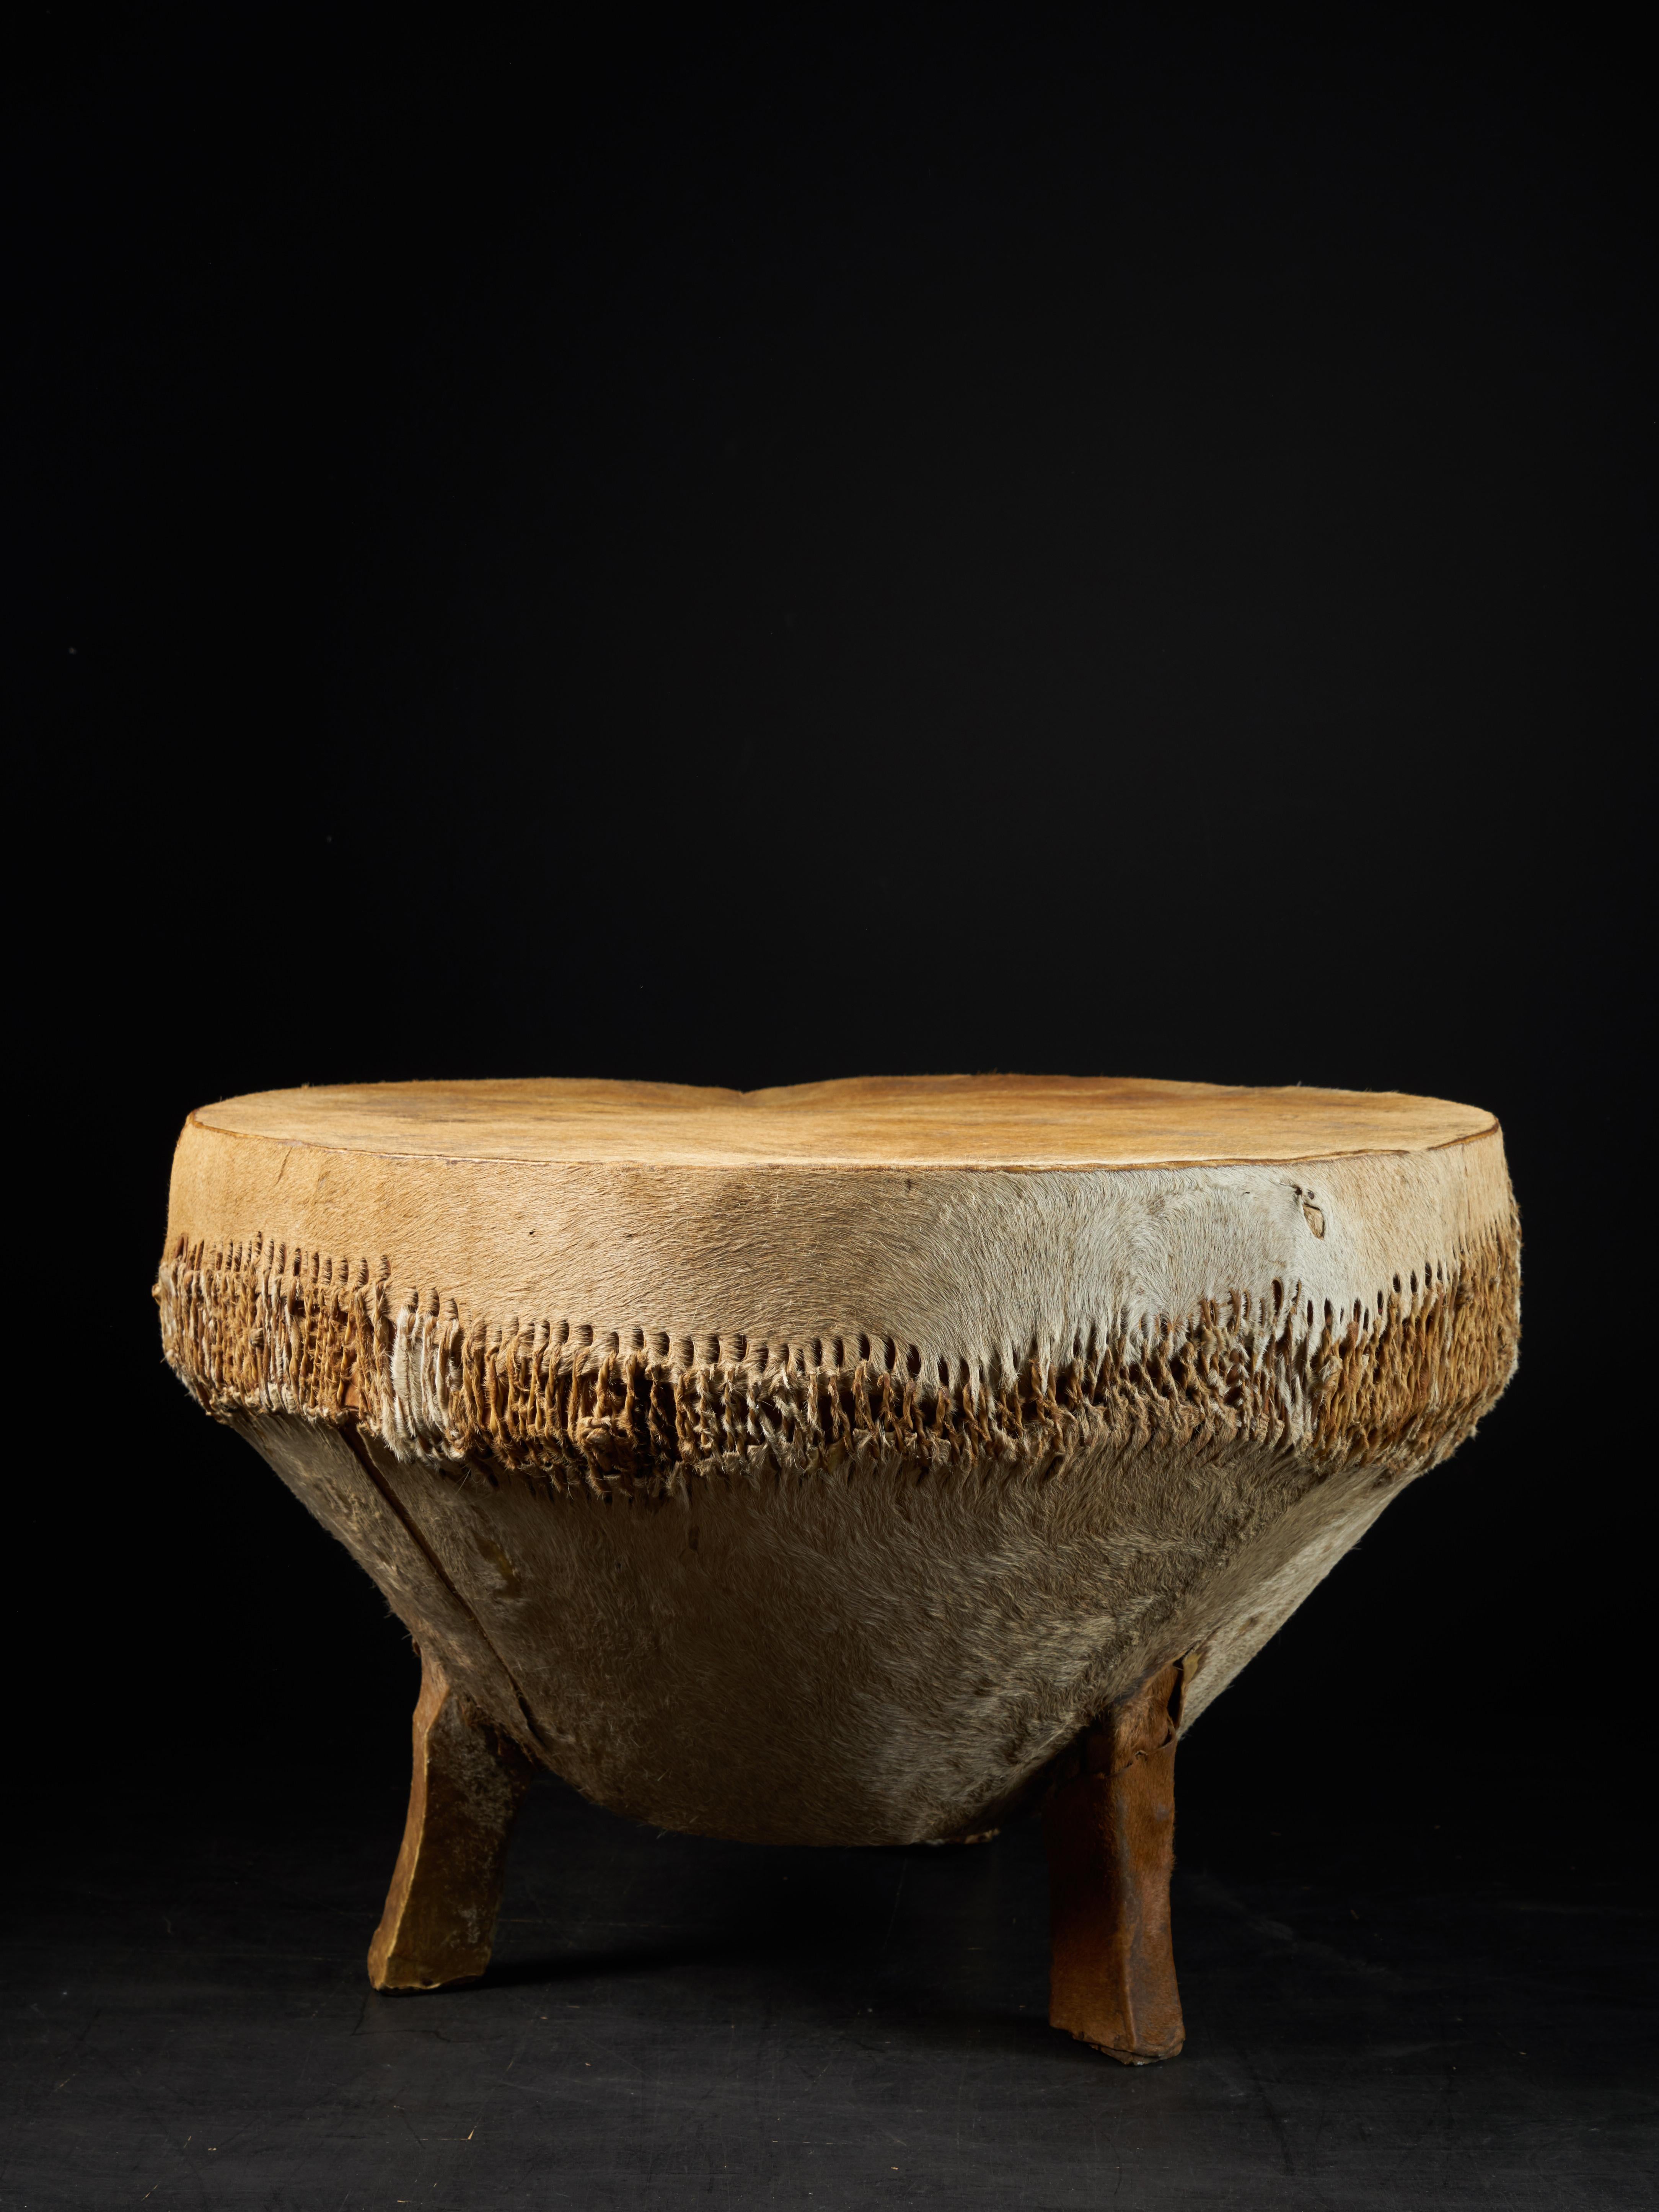 wooden drum made of animal skin